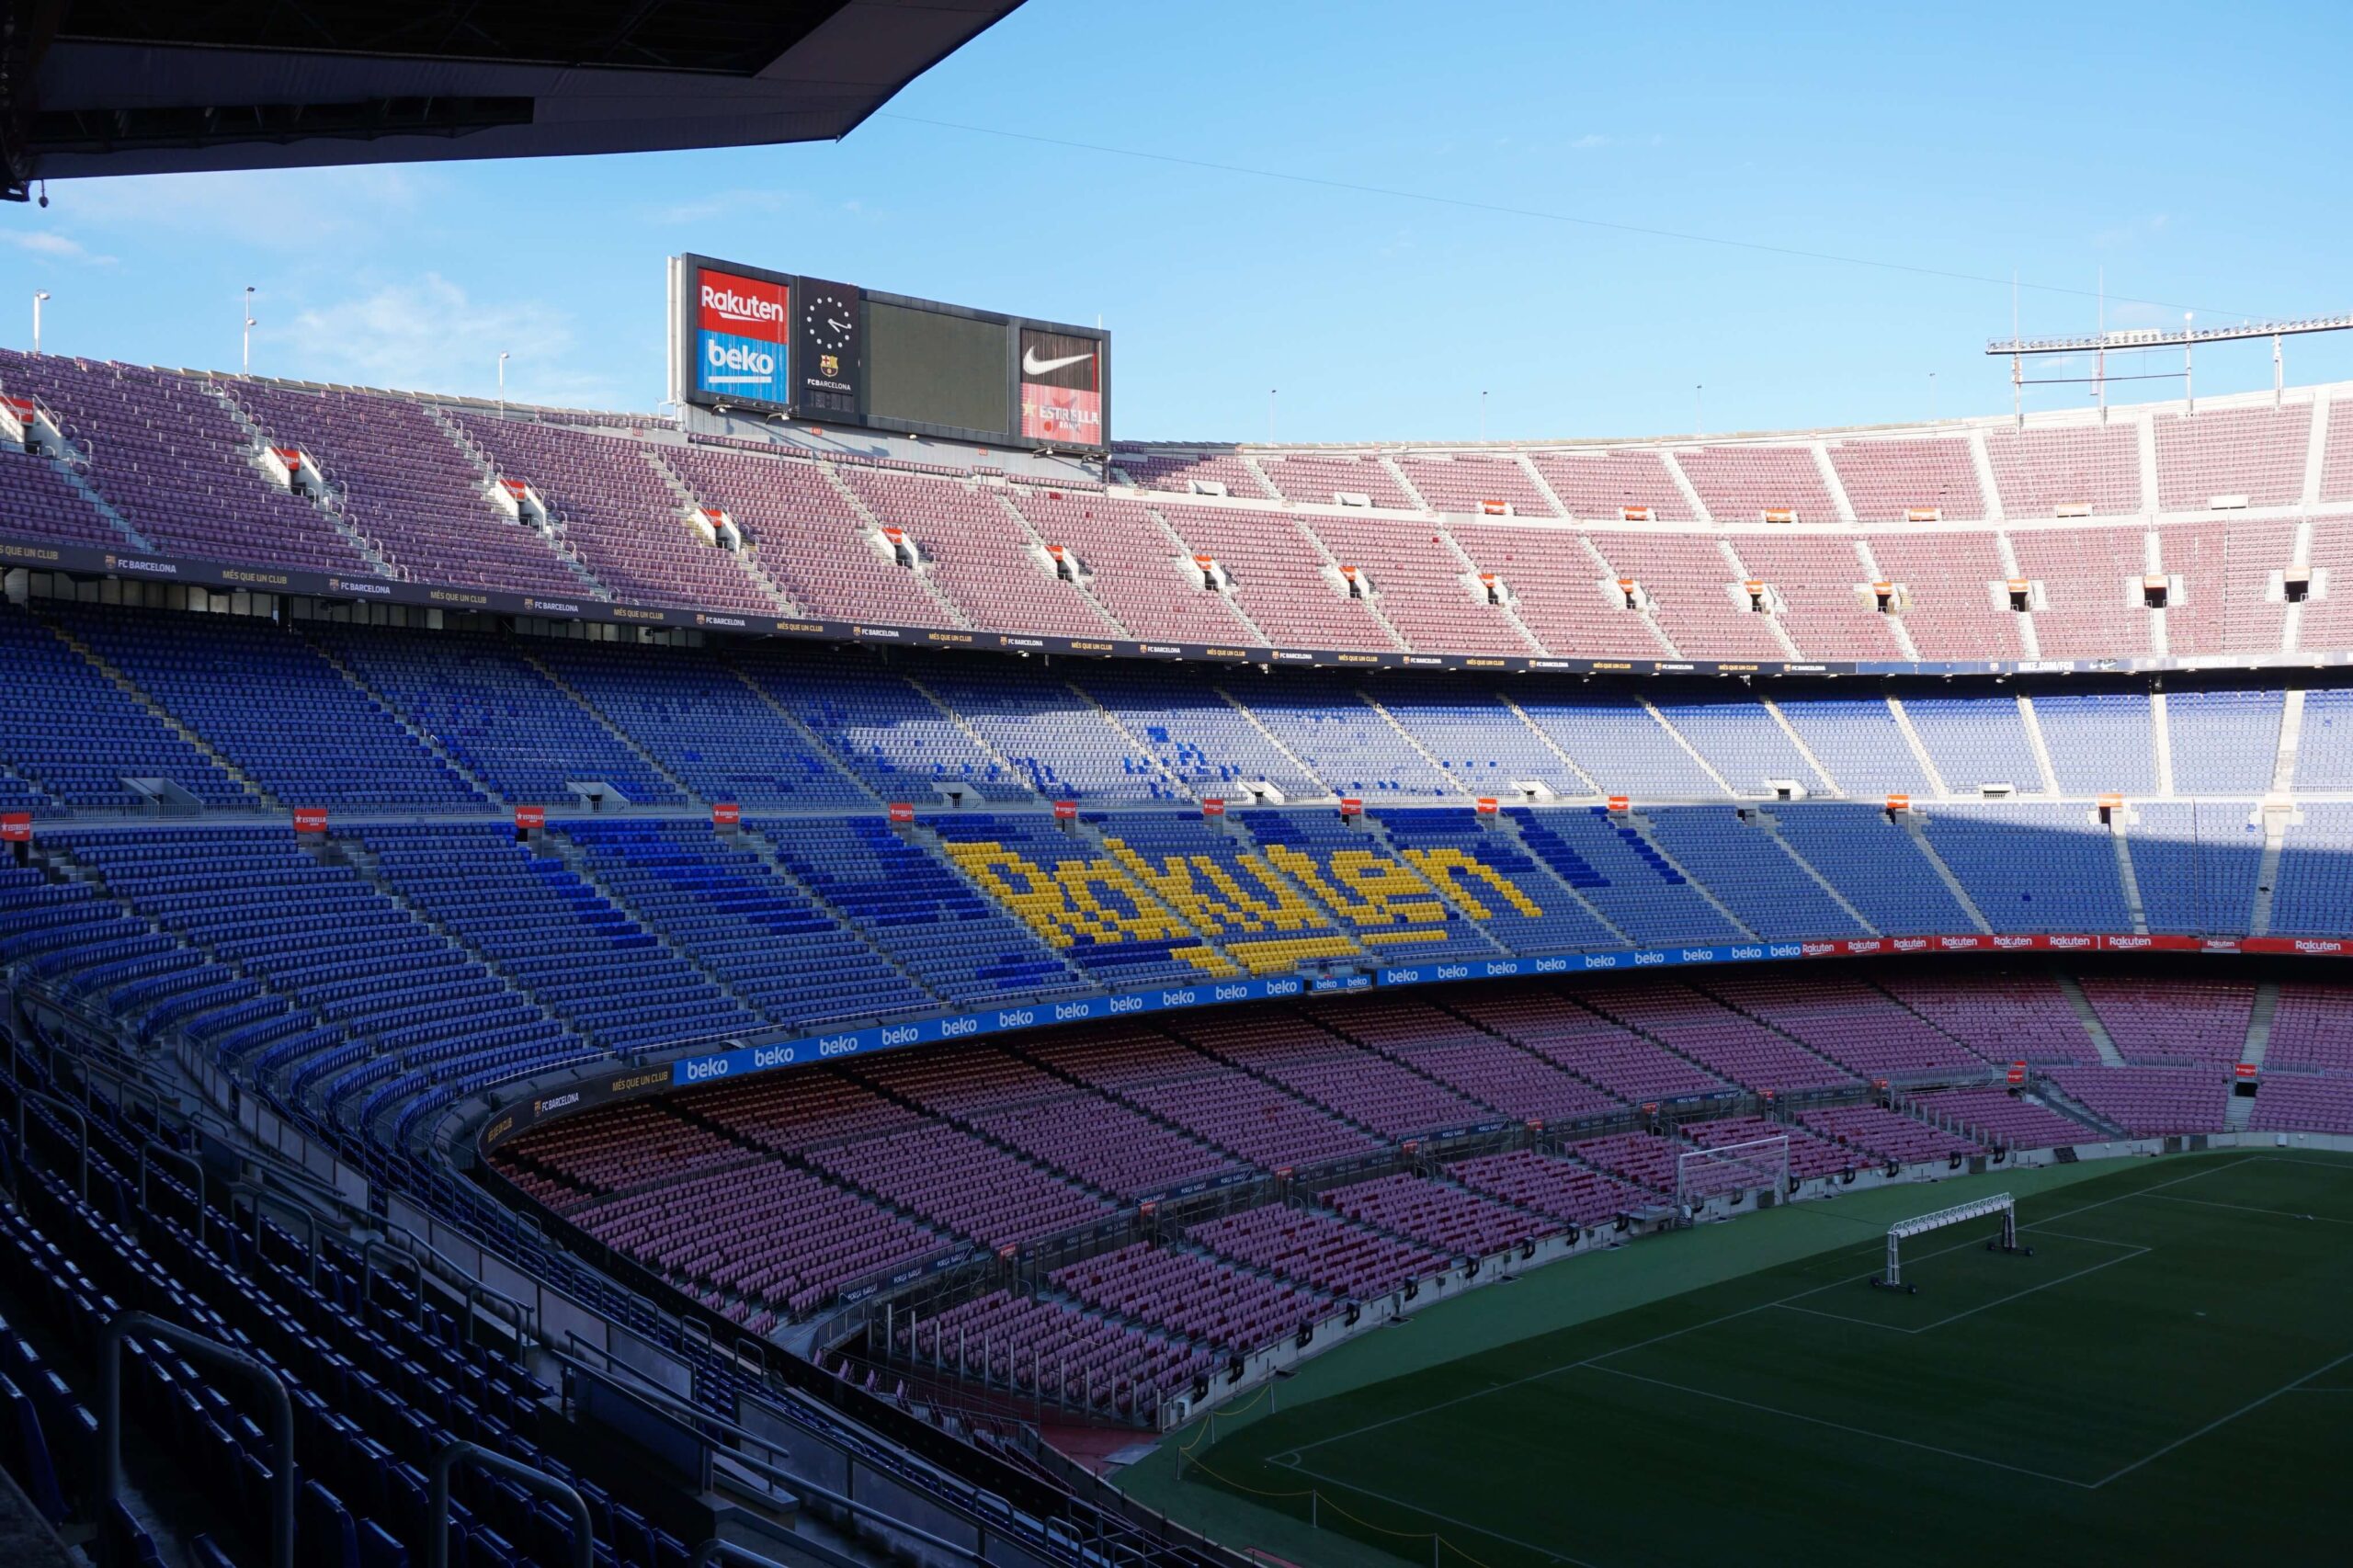 One end of FC Barcelona's Nou Camp Stadium